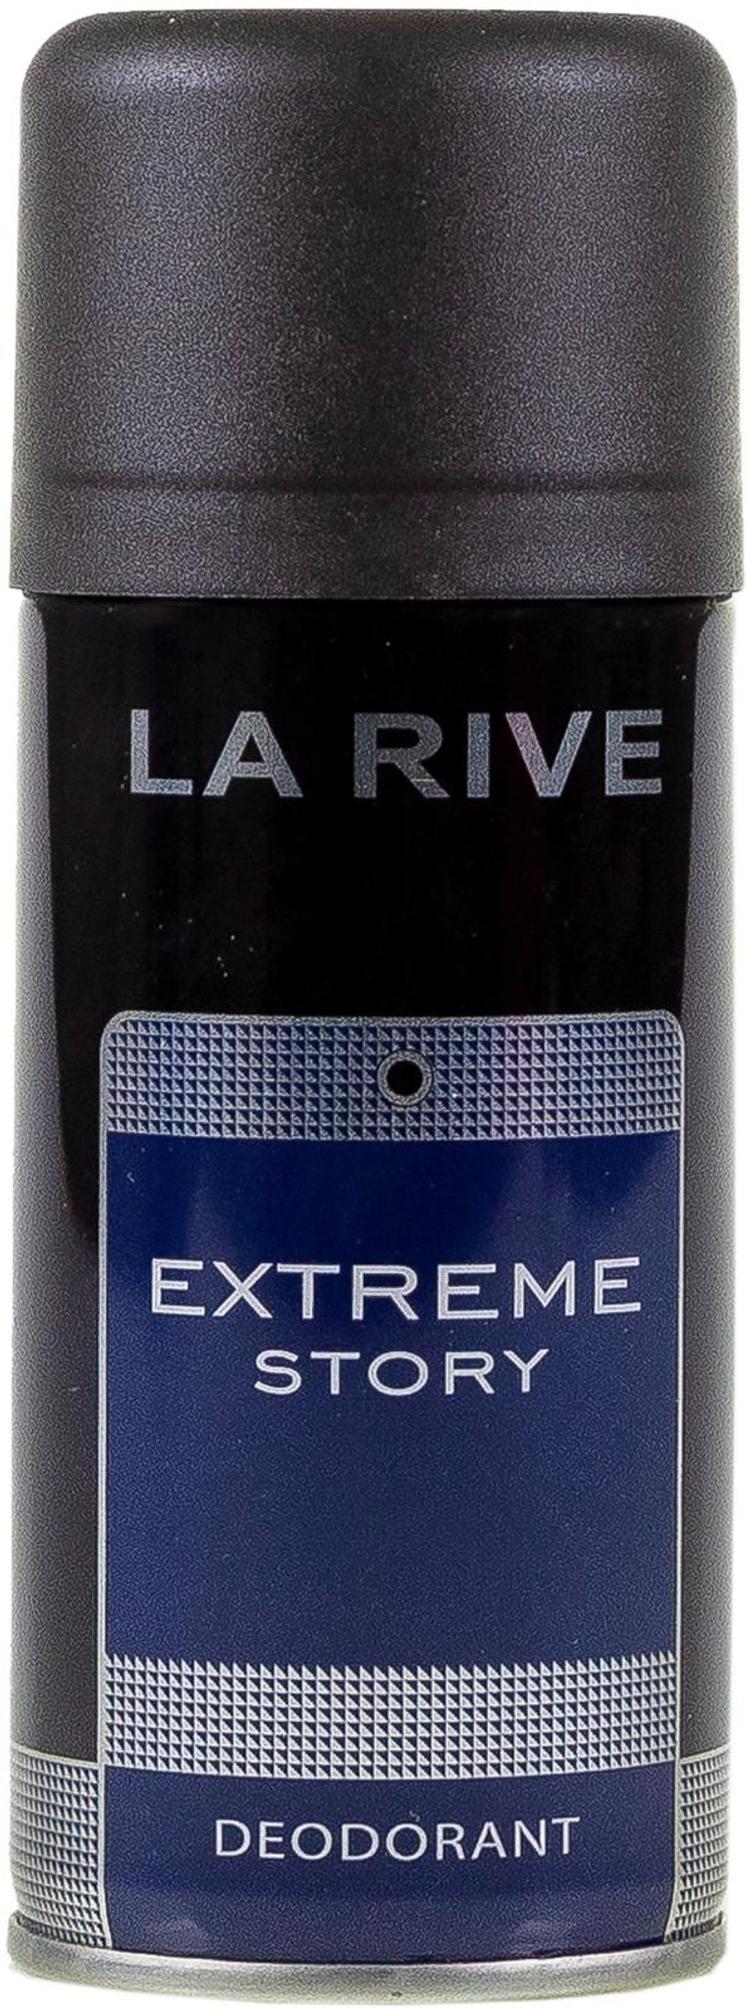 La Rive Extreme Story Deodorantti spray 150ml